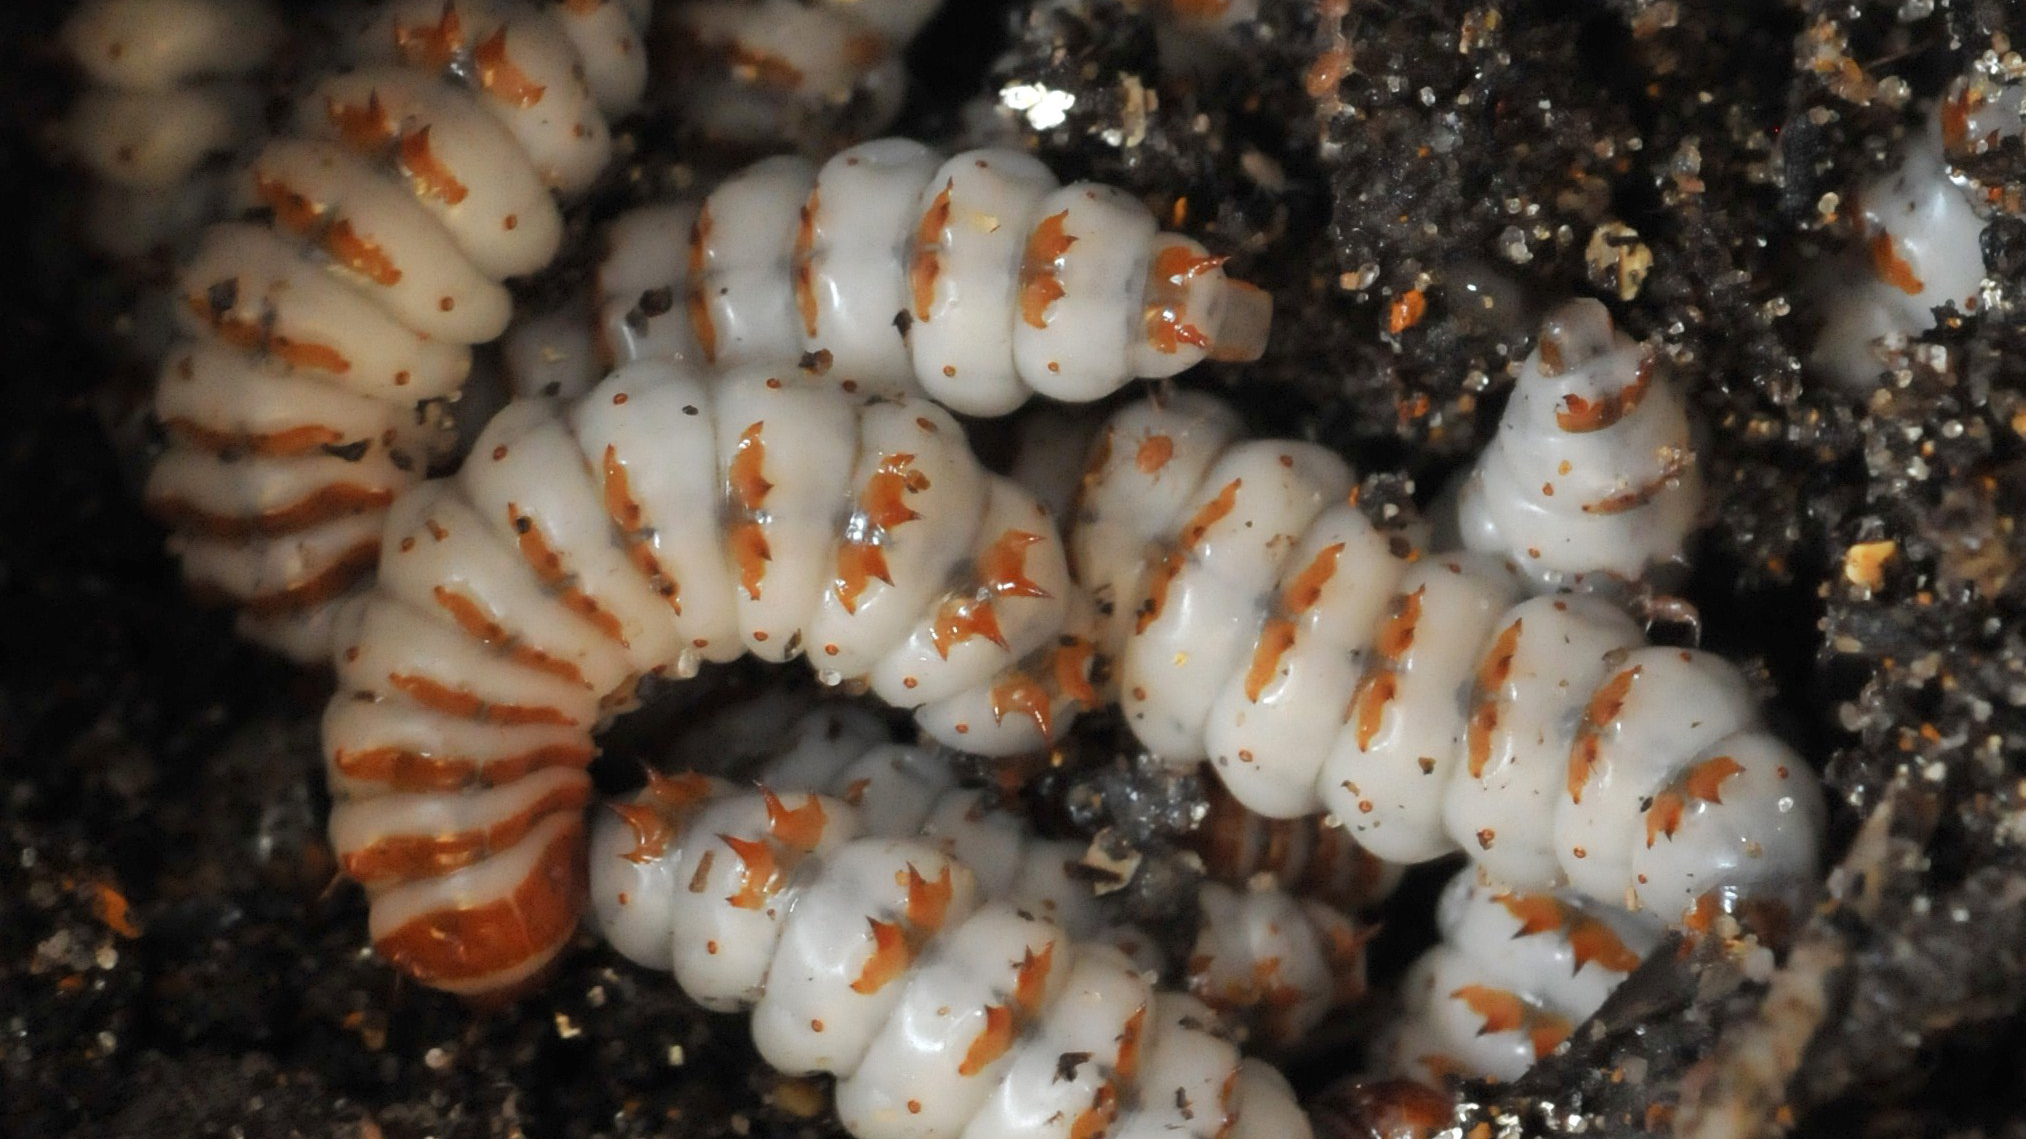 American Burying Beetle larvae. Photo © Marian Brickner courtesy of the St. Louis Zoo